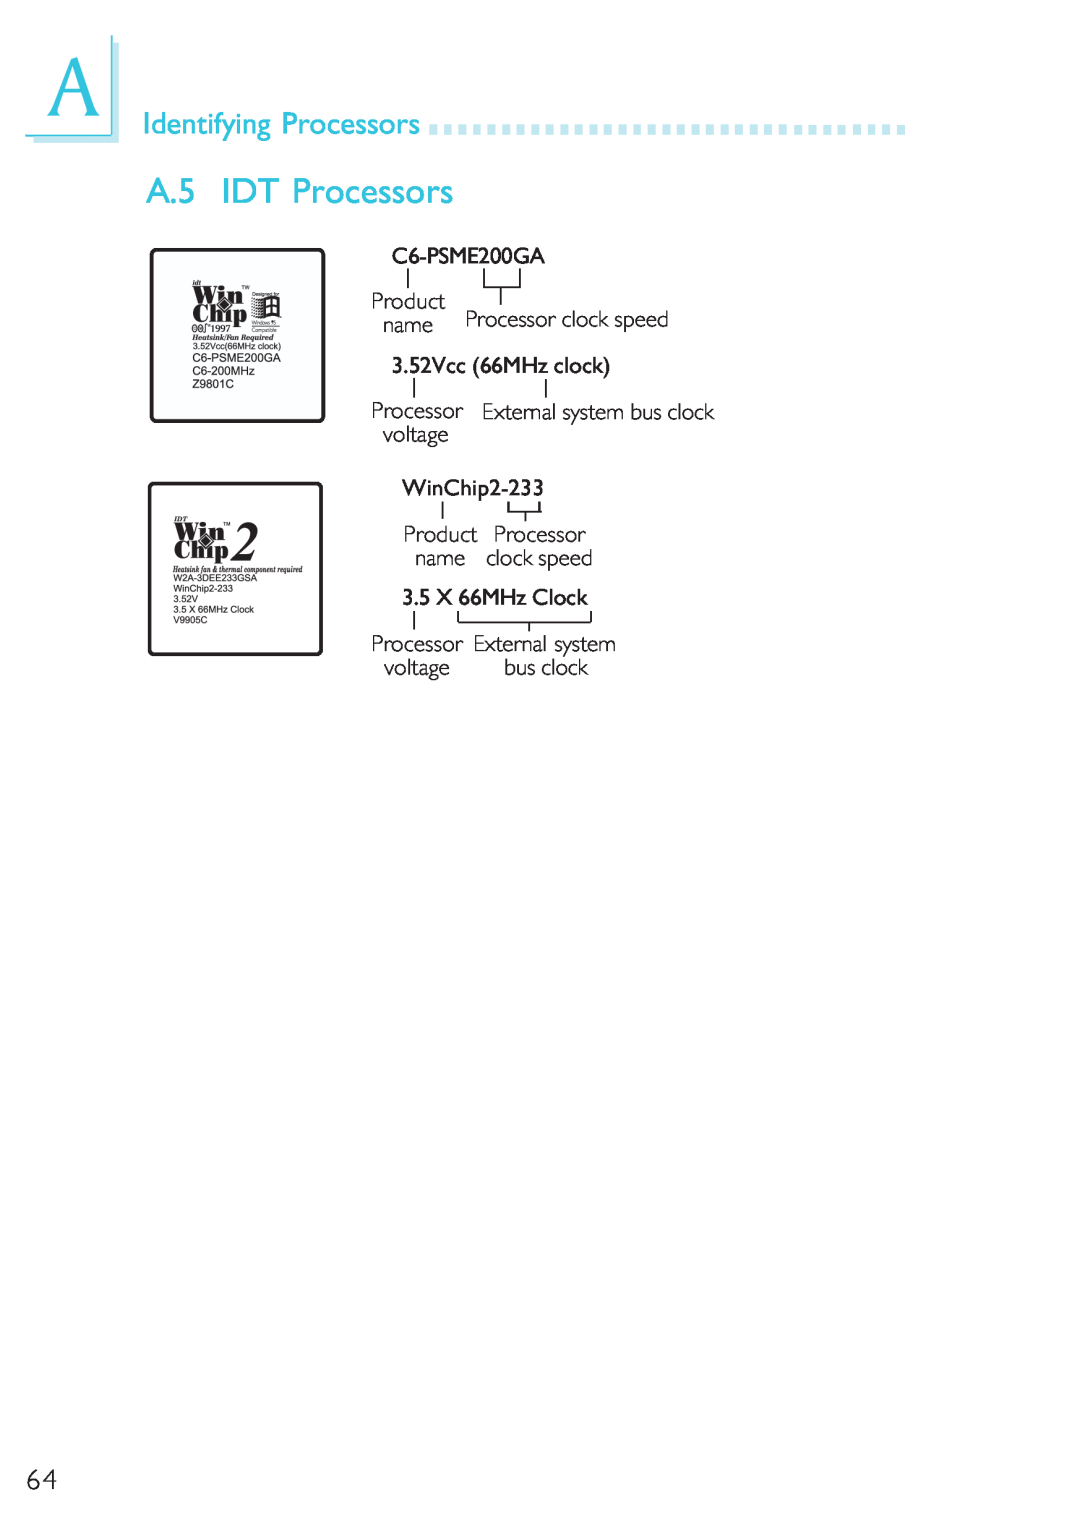 Microsoft G7VP2 manual A.5 IDT Processors, Identifying Processors, name 